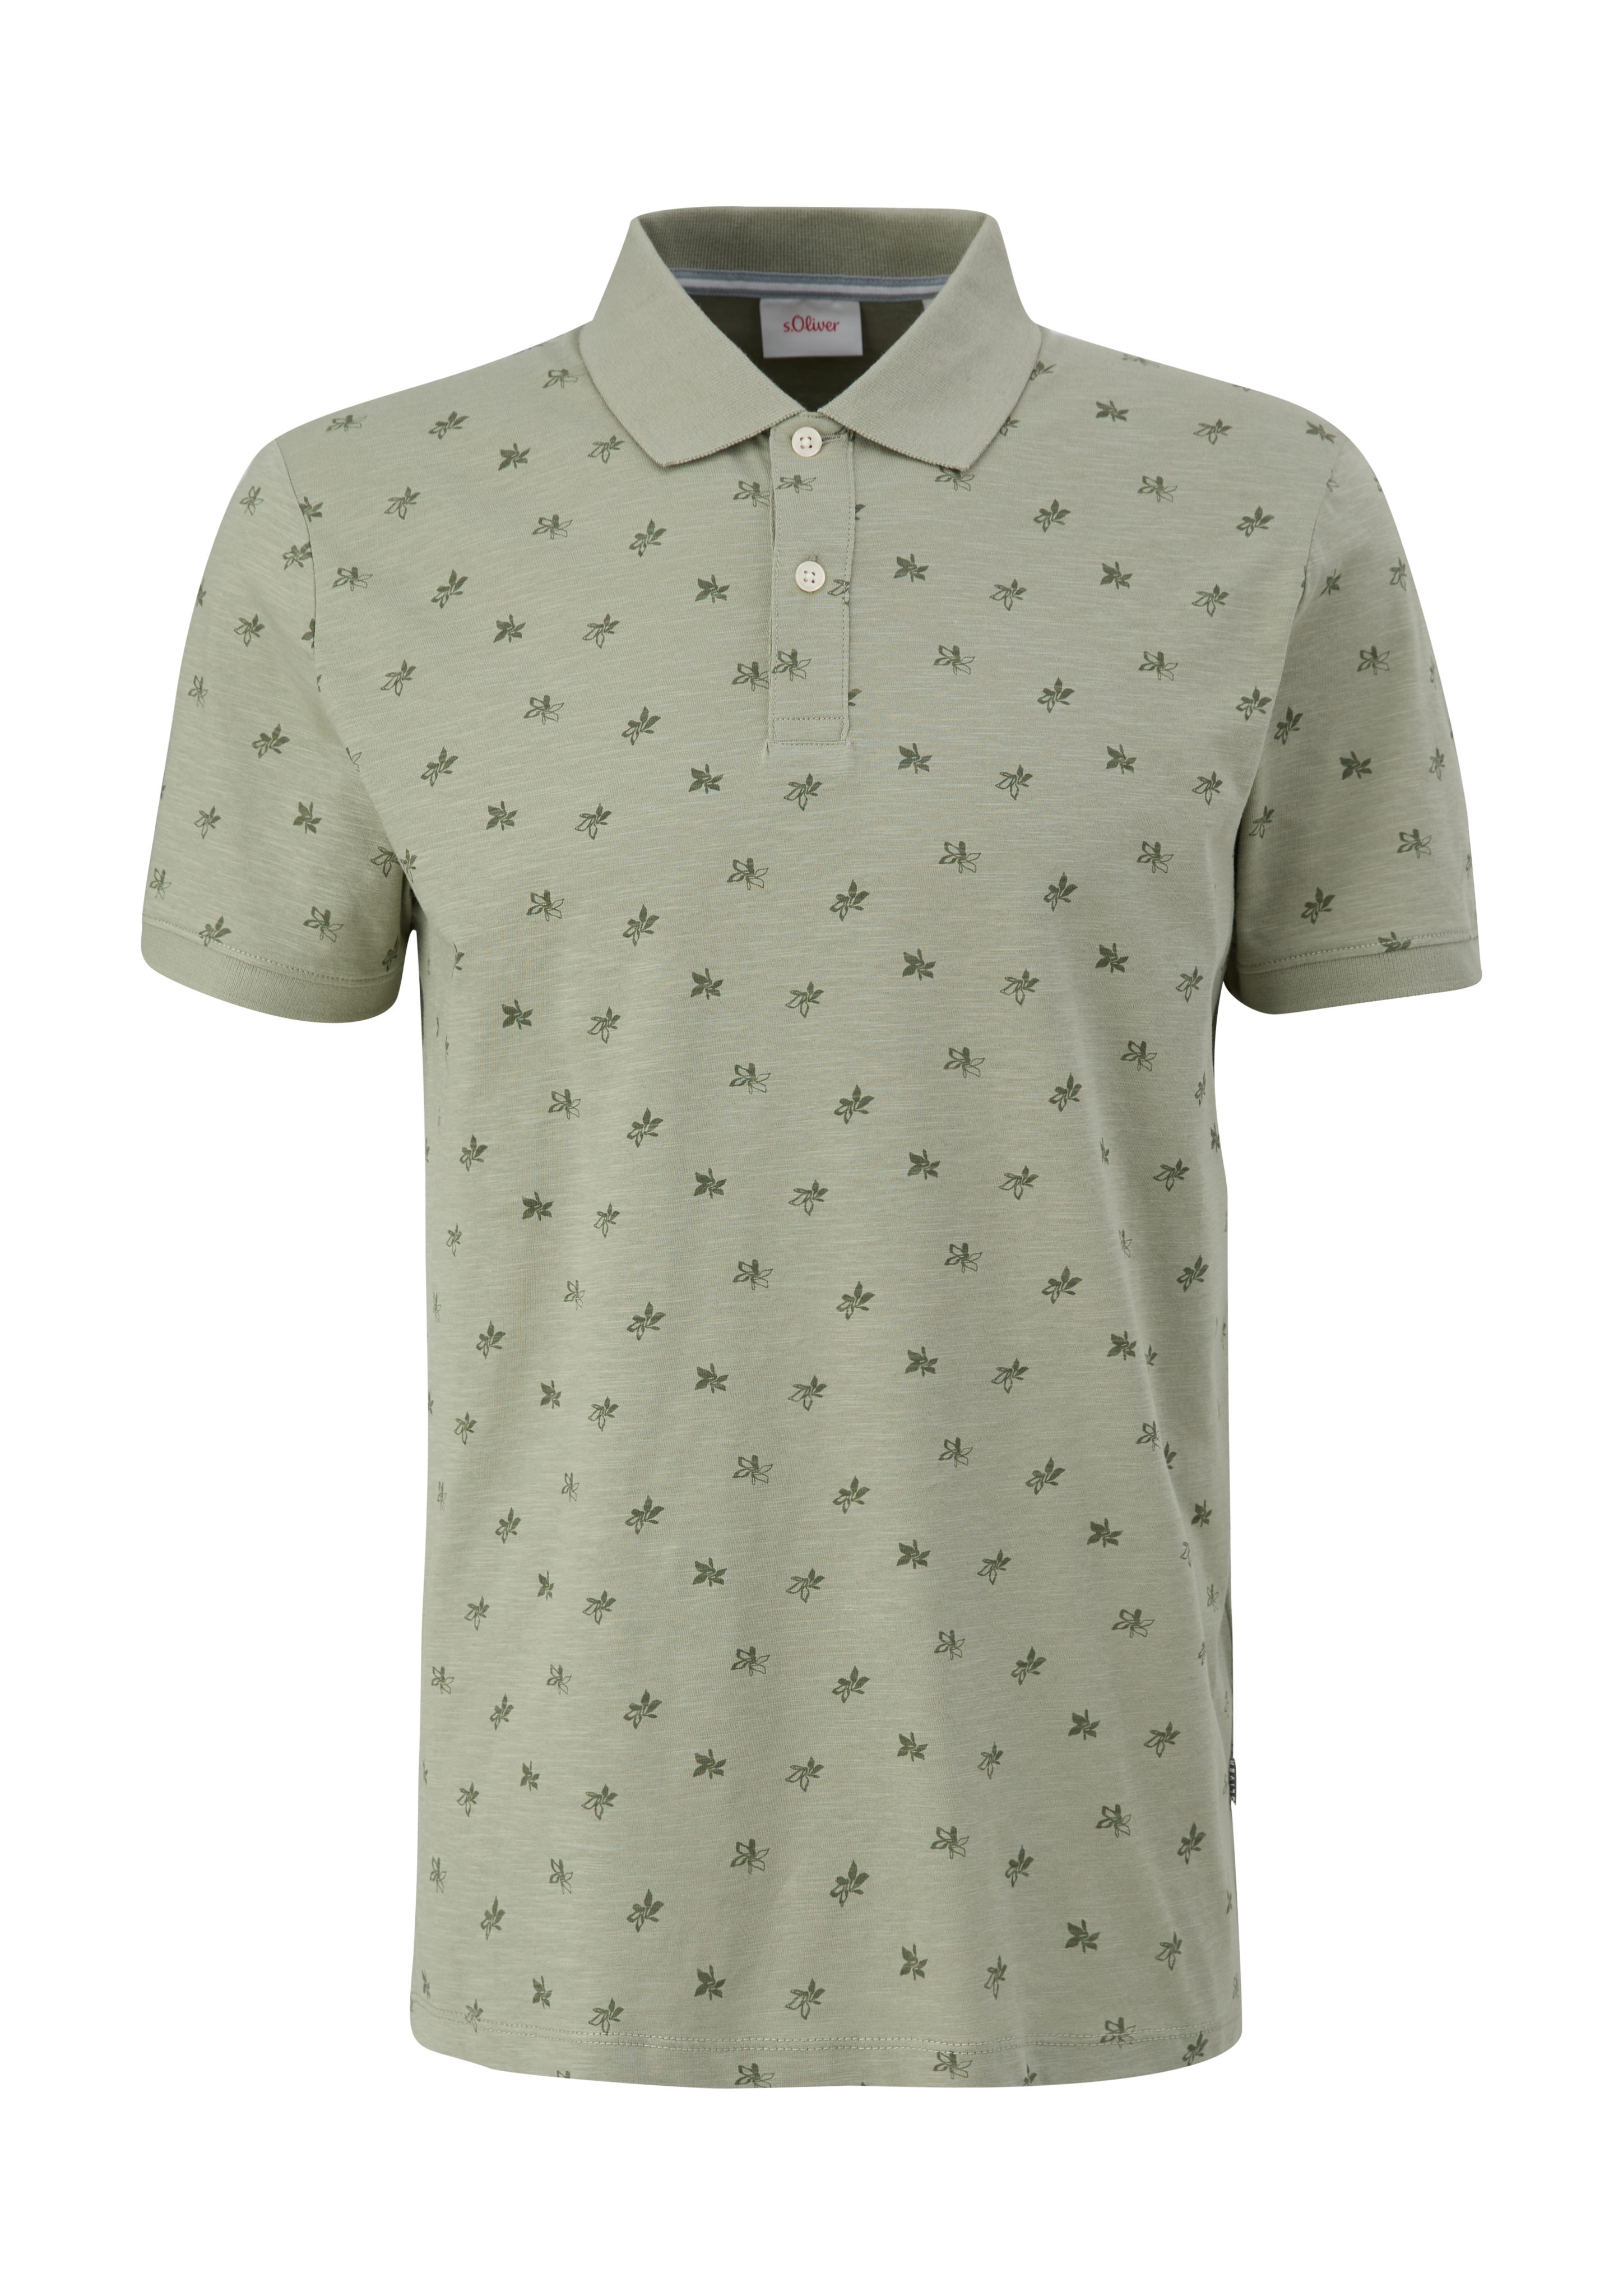 Poloshirt s.Oliver Allover-Print olivgrün Poloshirt mit